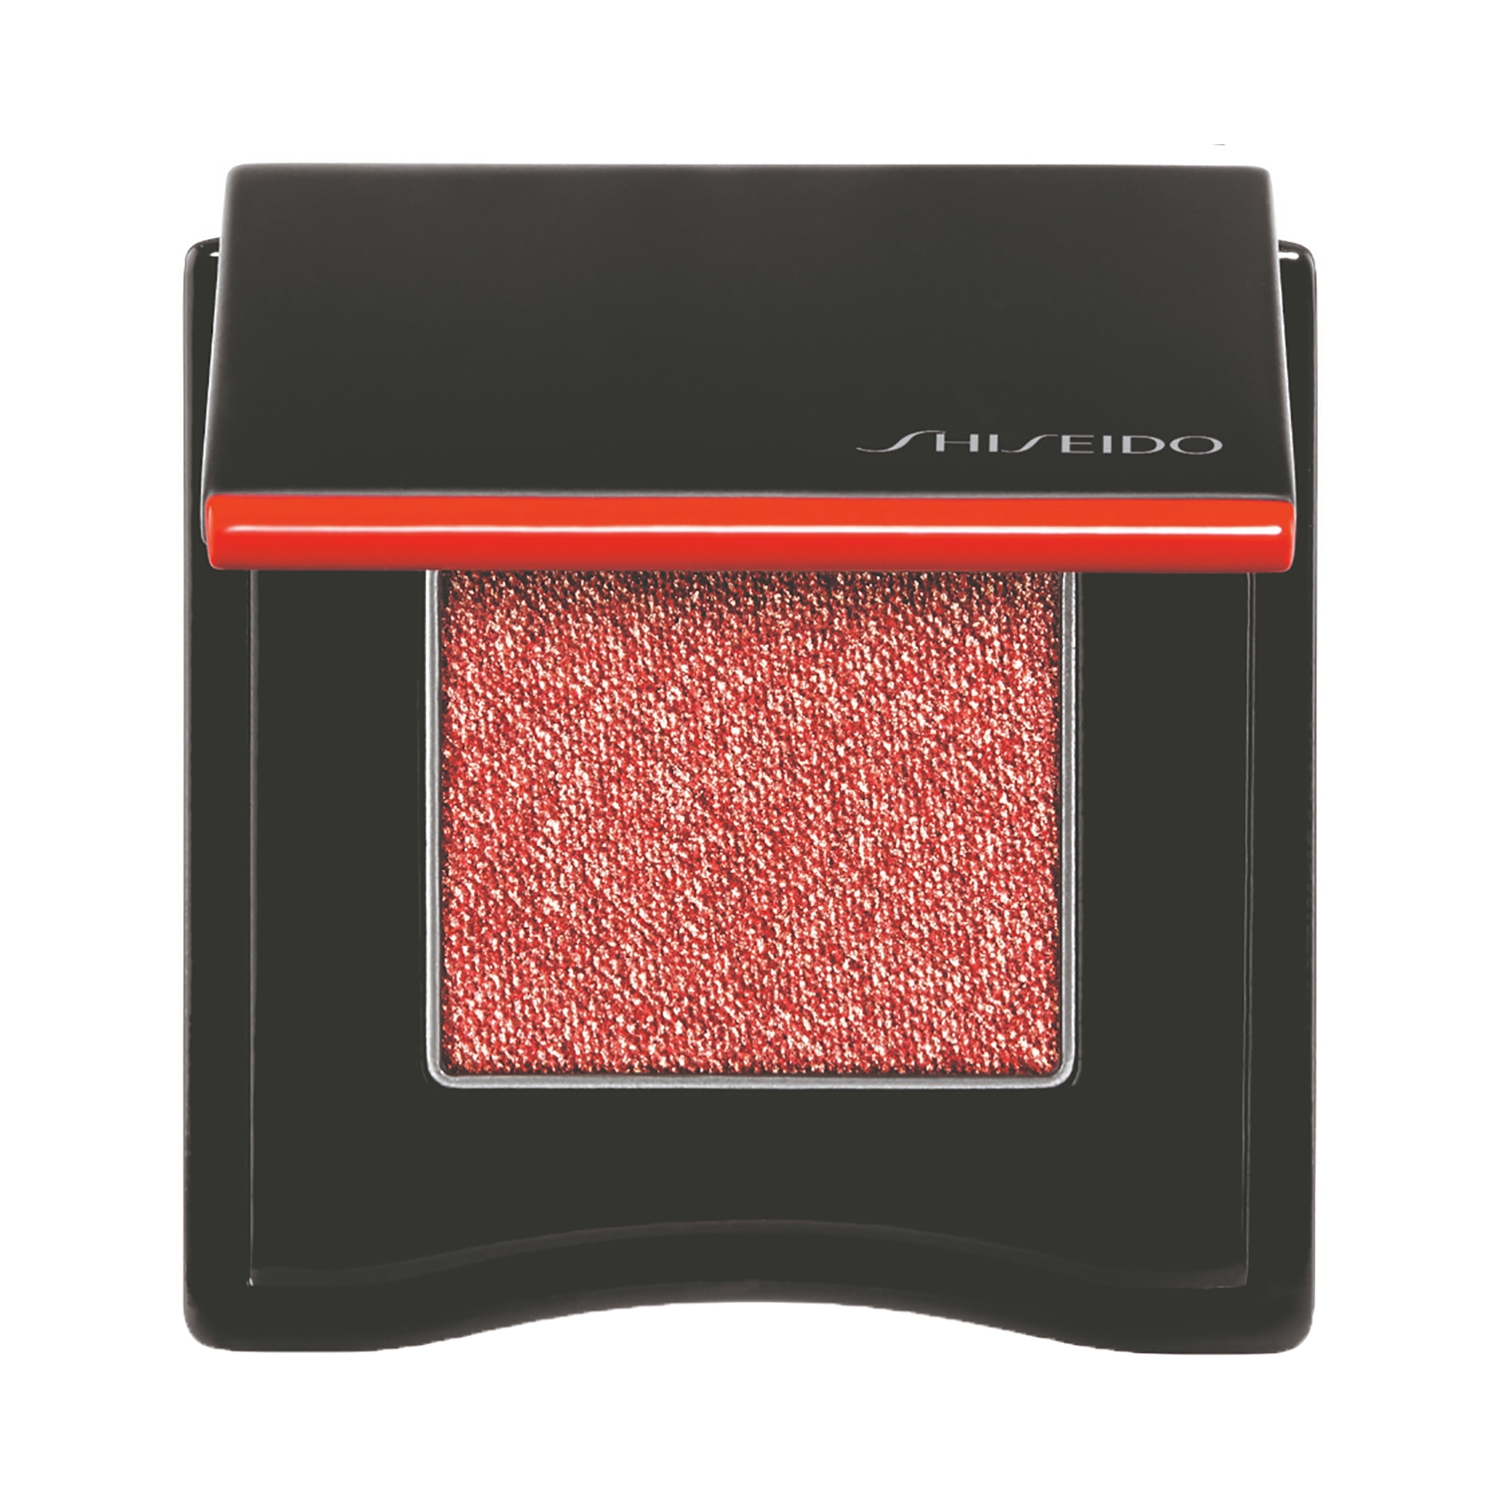 Shiseido | Shiseido Pop Powdergel Eye Shadow - 14 Kura Coral (2.2g)